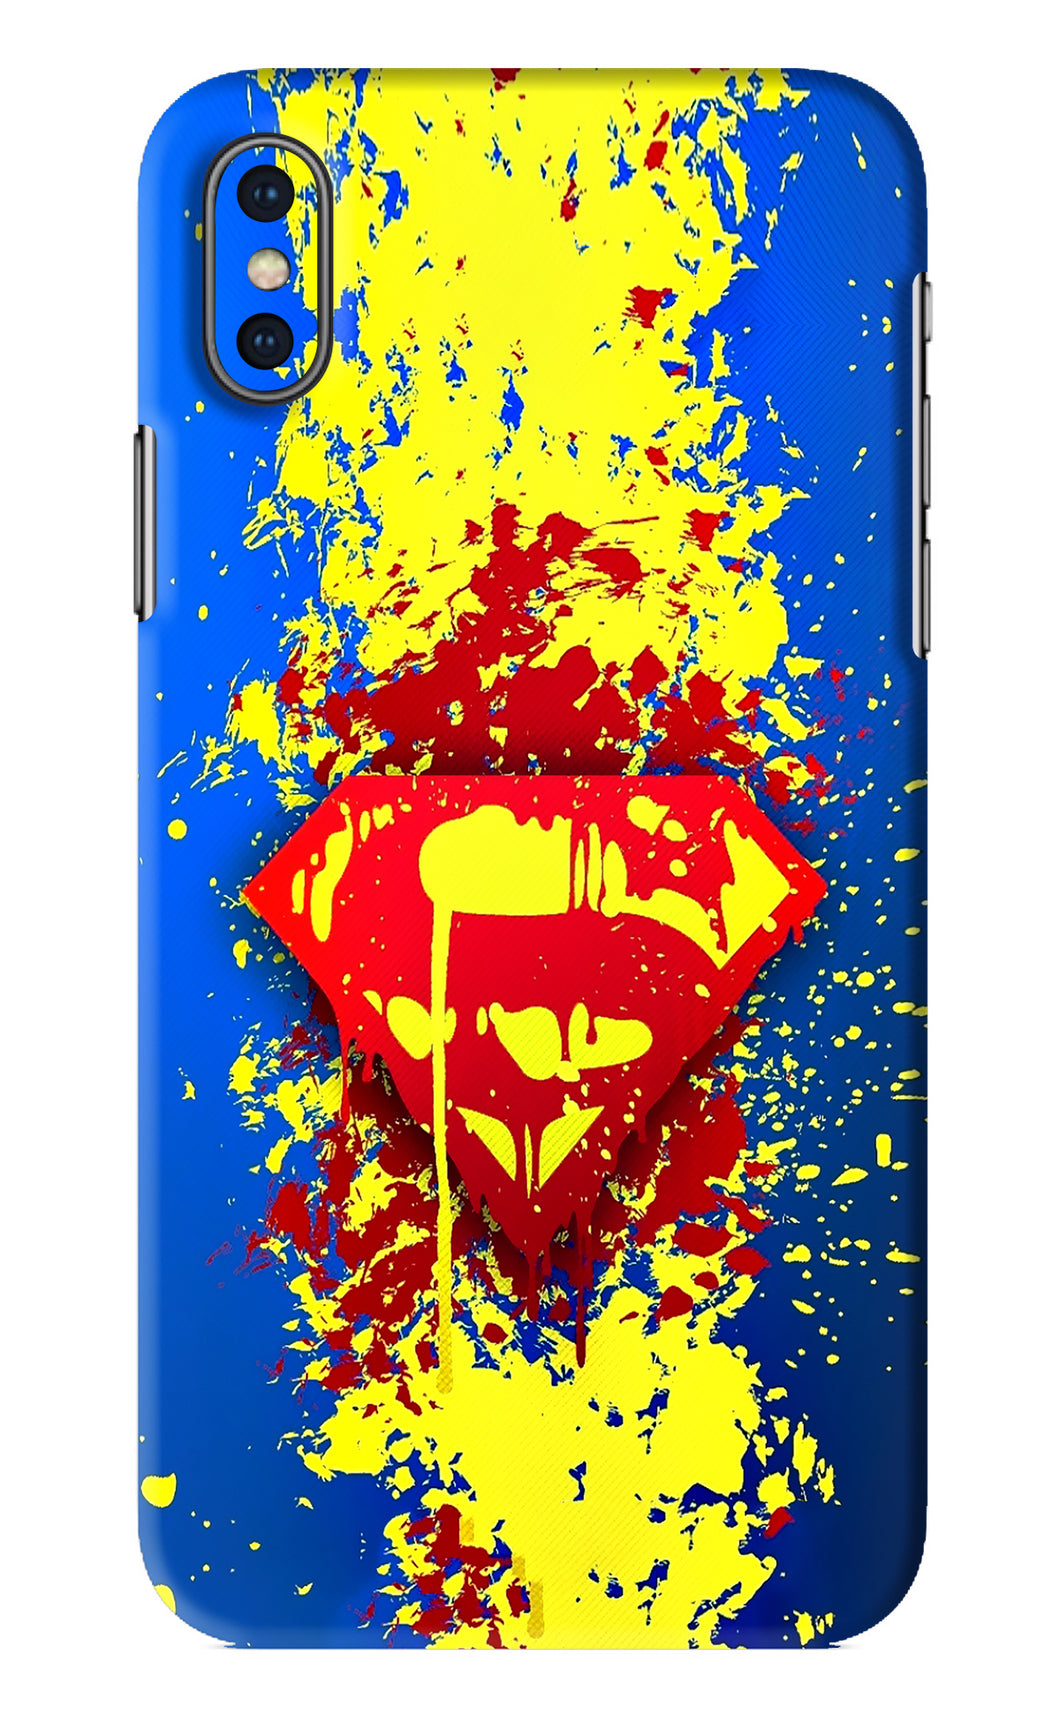 Superman logo iPhone X Back Skin Wrap